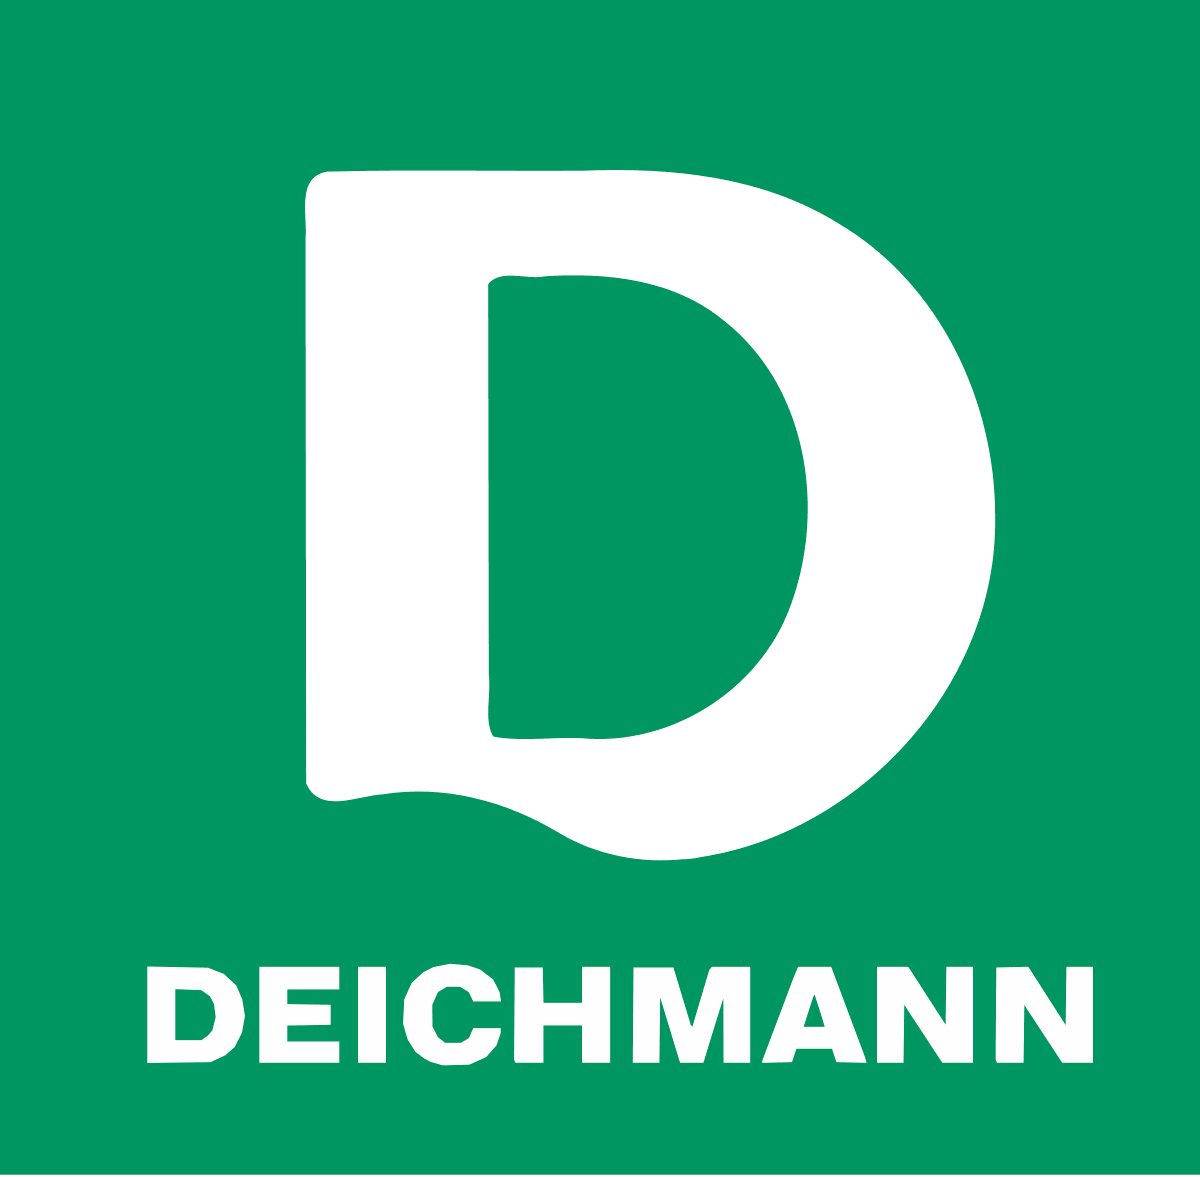 DEICHMANN program